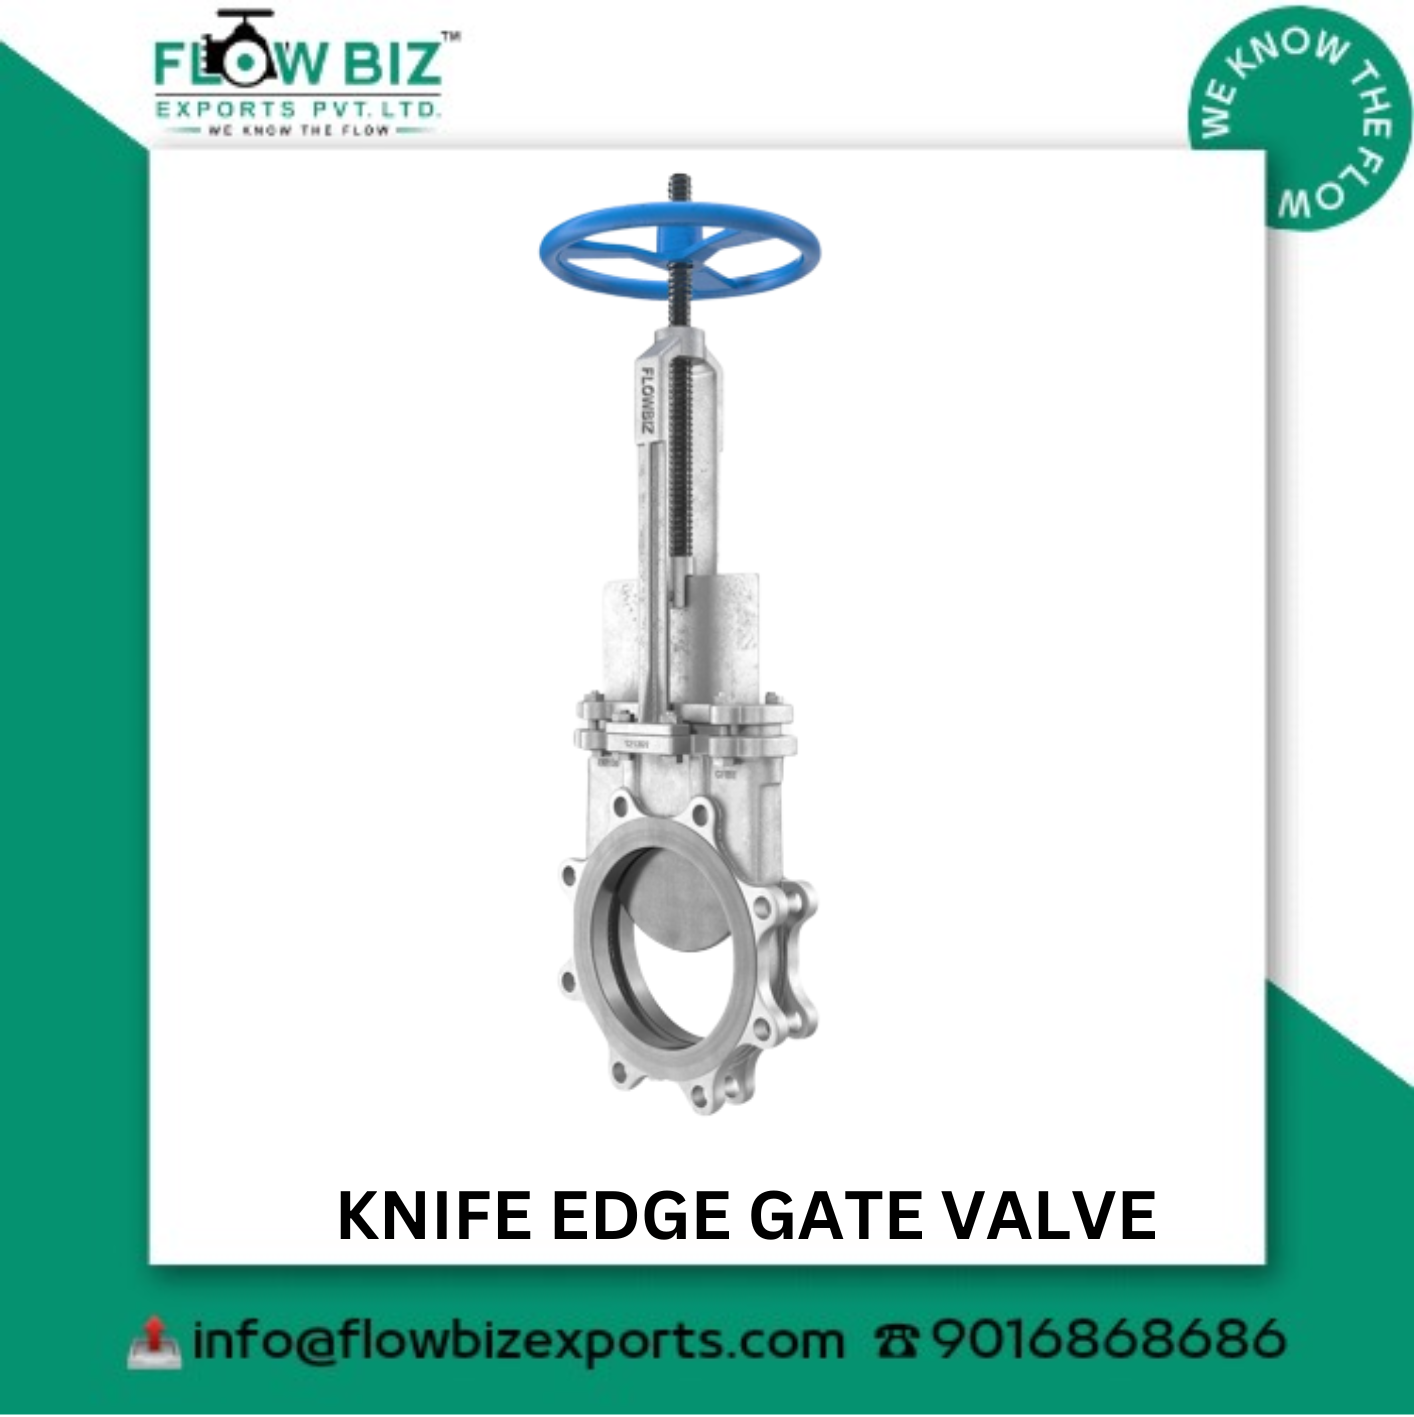 Knife EDGE Gate Valve Manufacturer in Nashik